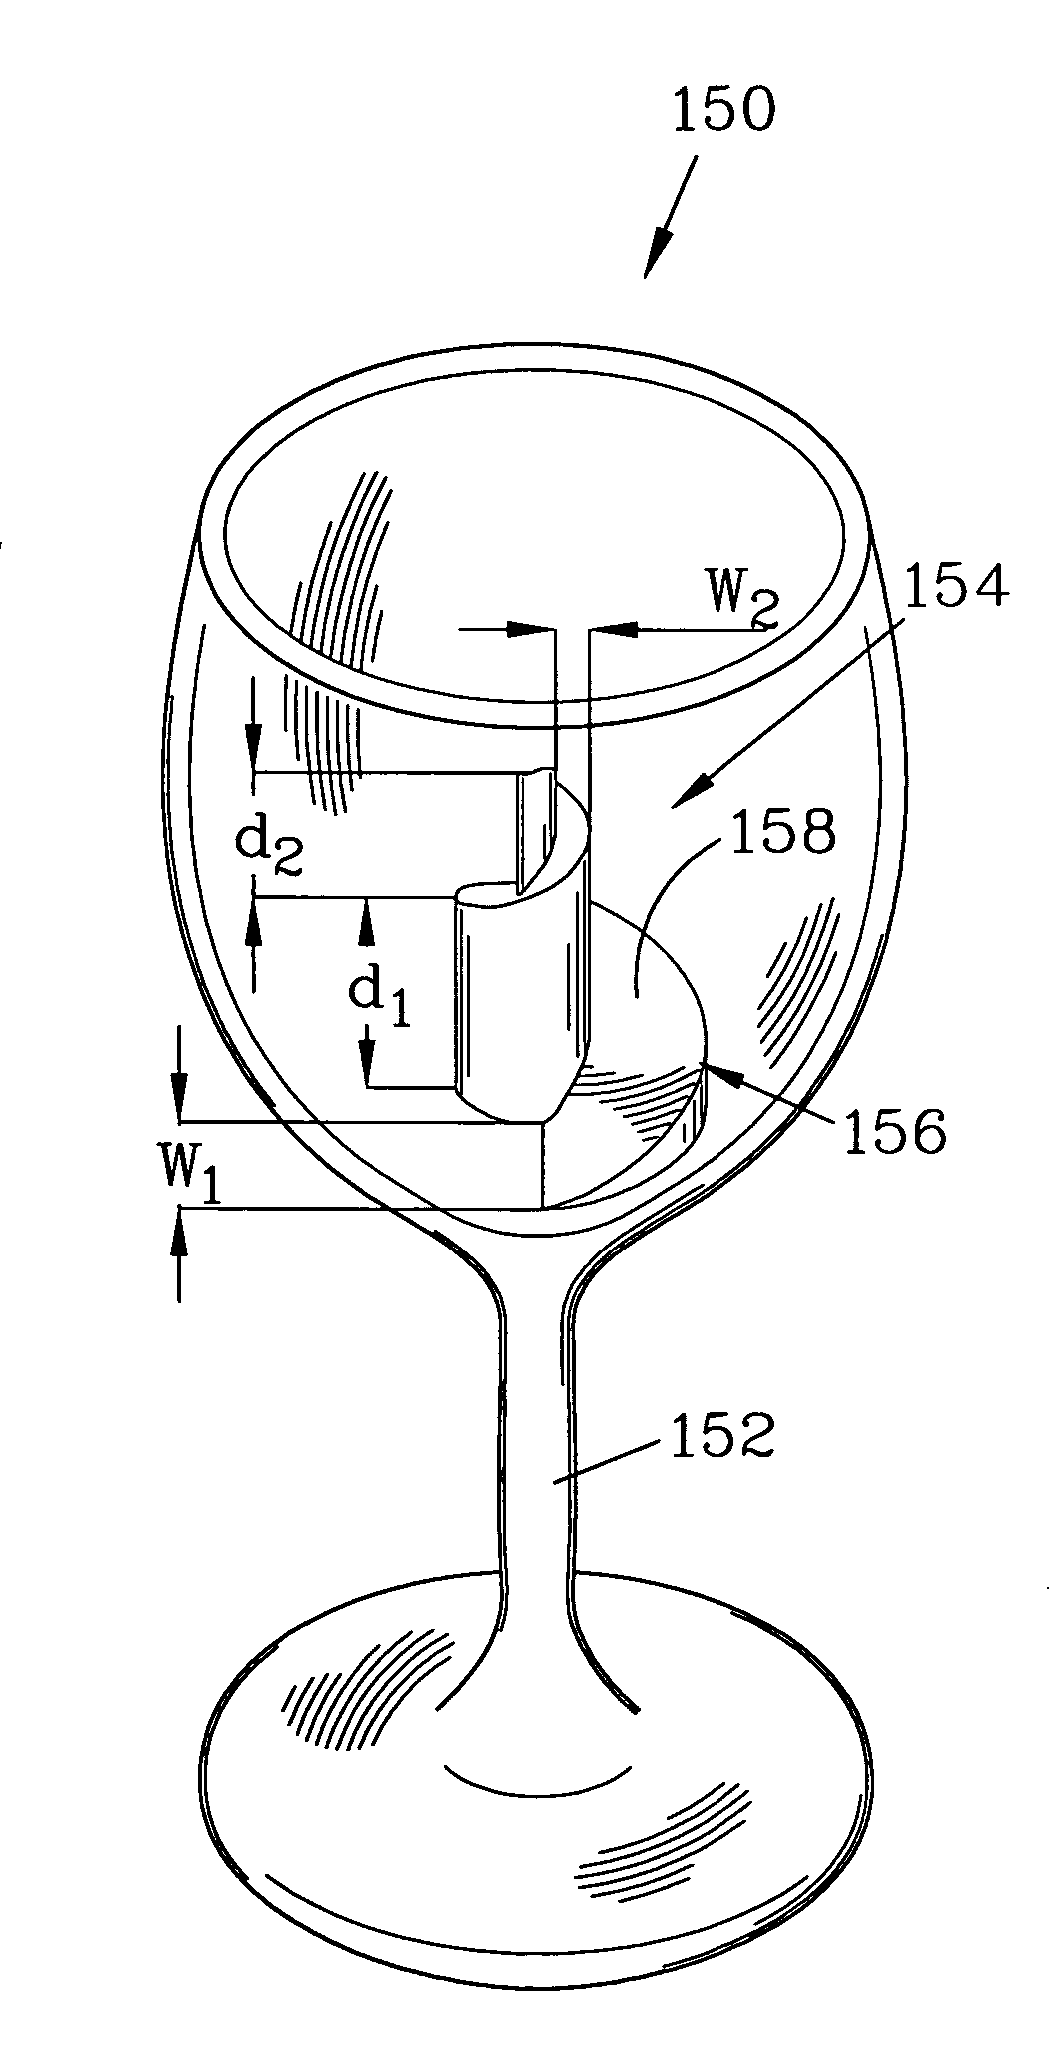 Bouquet enhancing wineglass